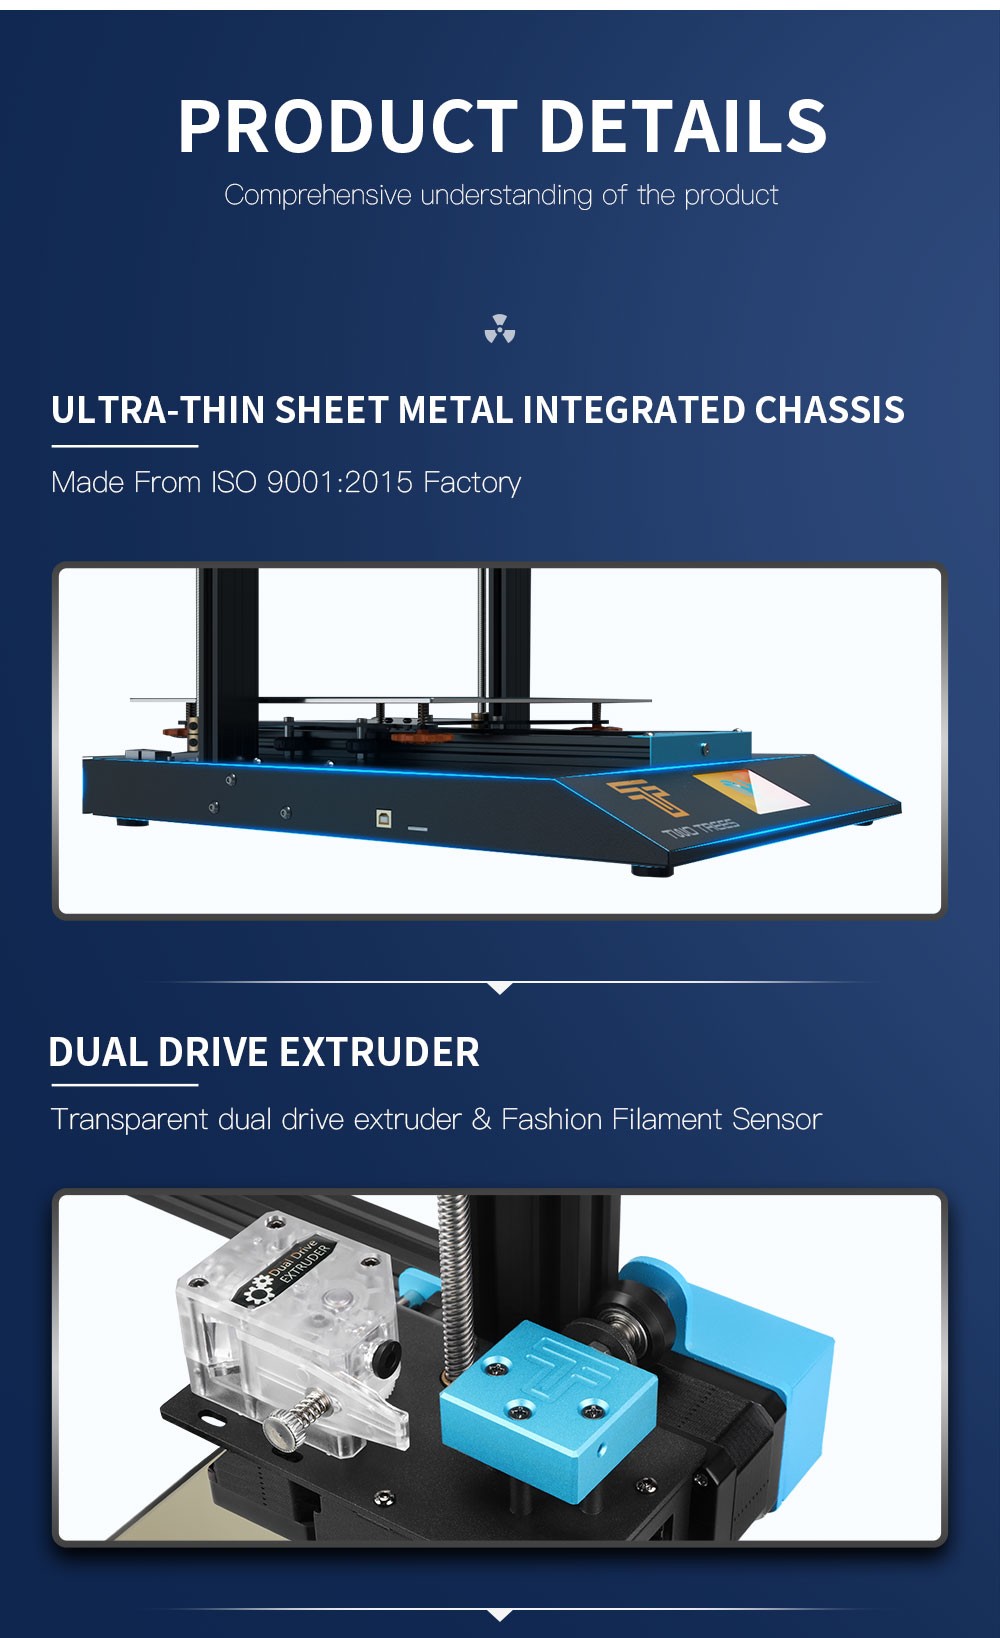 Twotress Bluer Plus 3D Printer Auto Leveling TMC2209/MKS Robin Nano/Power Resume/Filament Runout Detection 300x300x400m